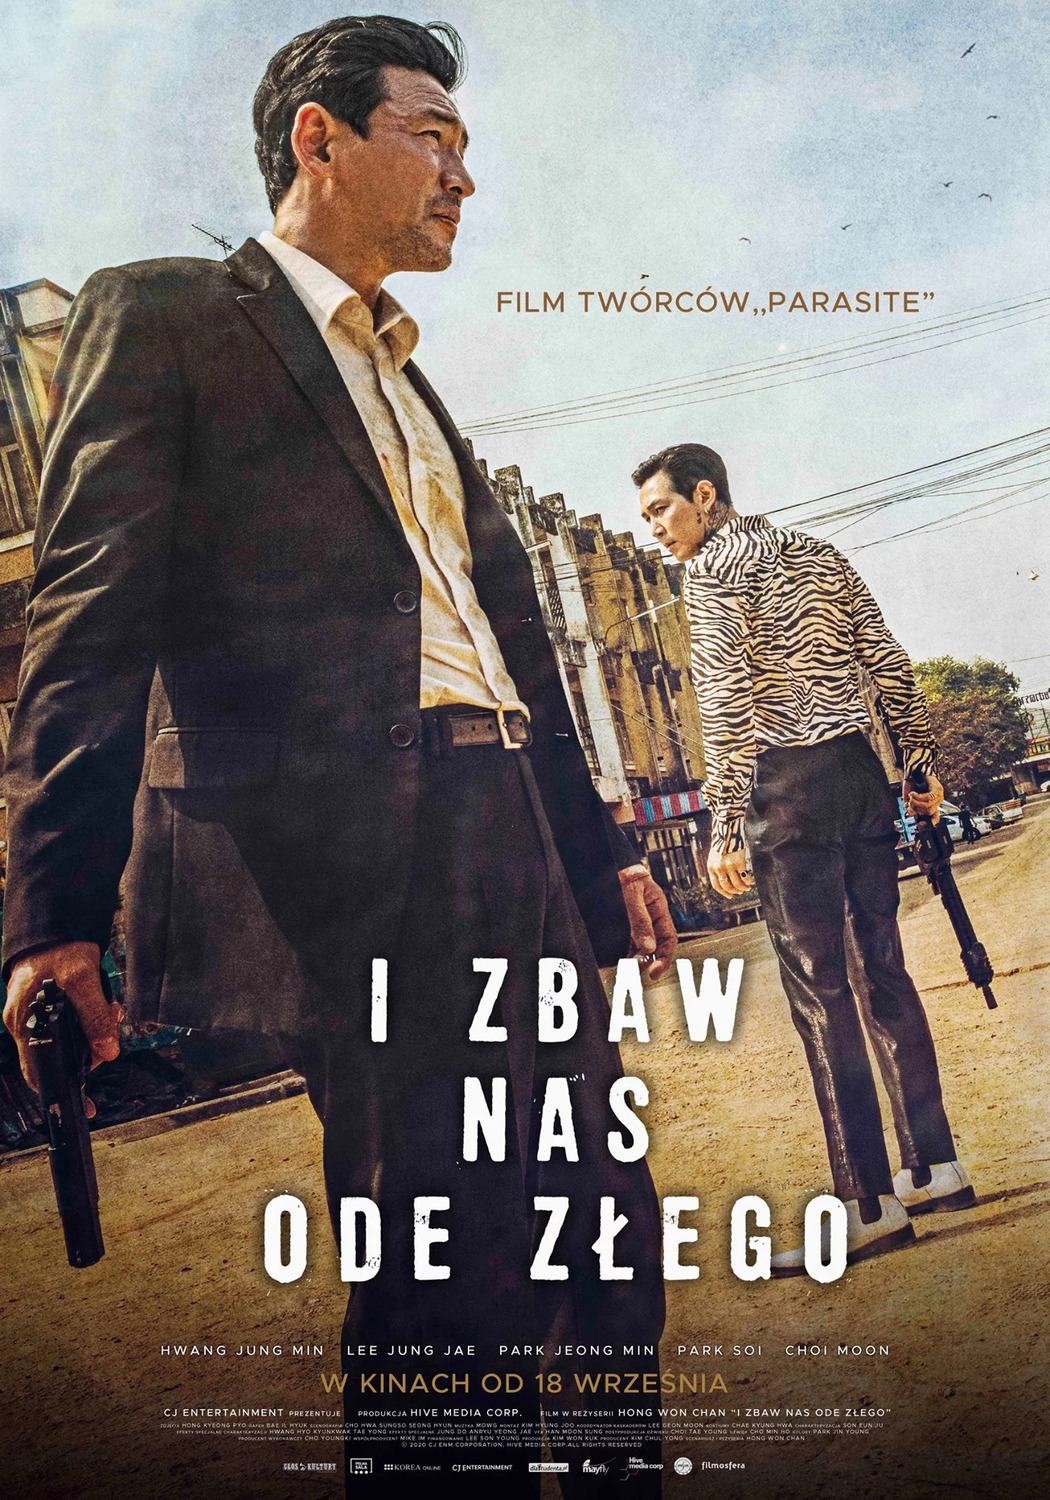 Extra Large Movie Poster Image for Daman akeseo goohasoseo 